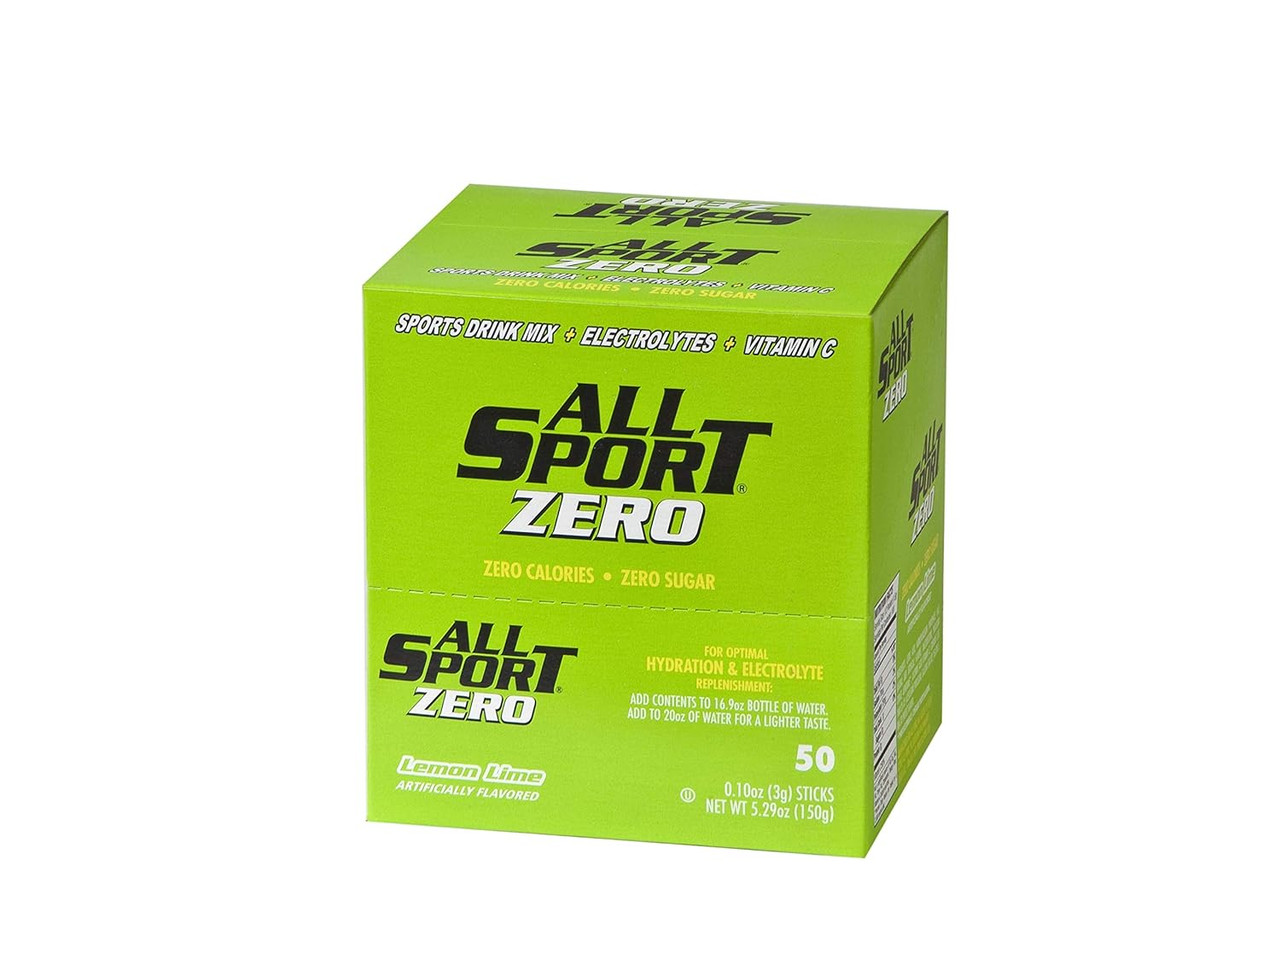 All Sport Powder Hydration (Lemon Lime) Stick, Zero Calorie, Performance Electrolyte Drink Mix, Sugar Free, 2x Potassium, 50 CT